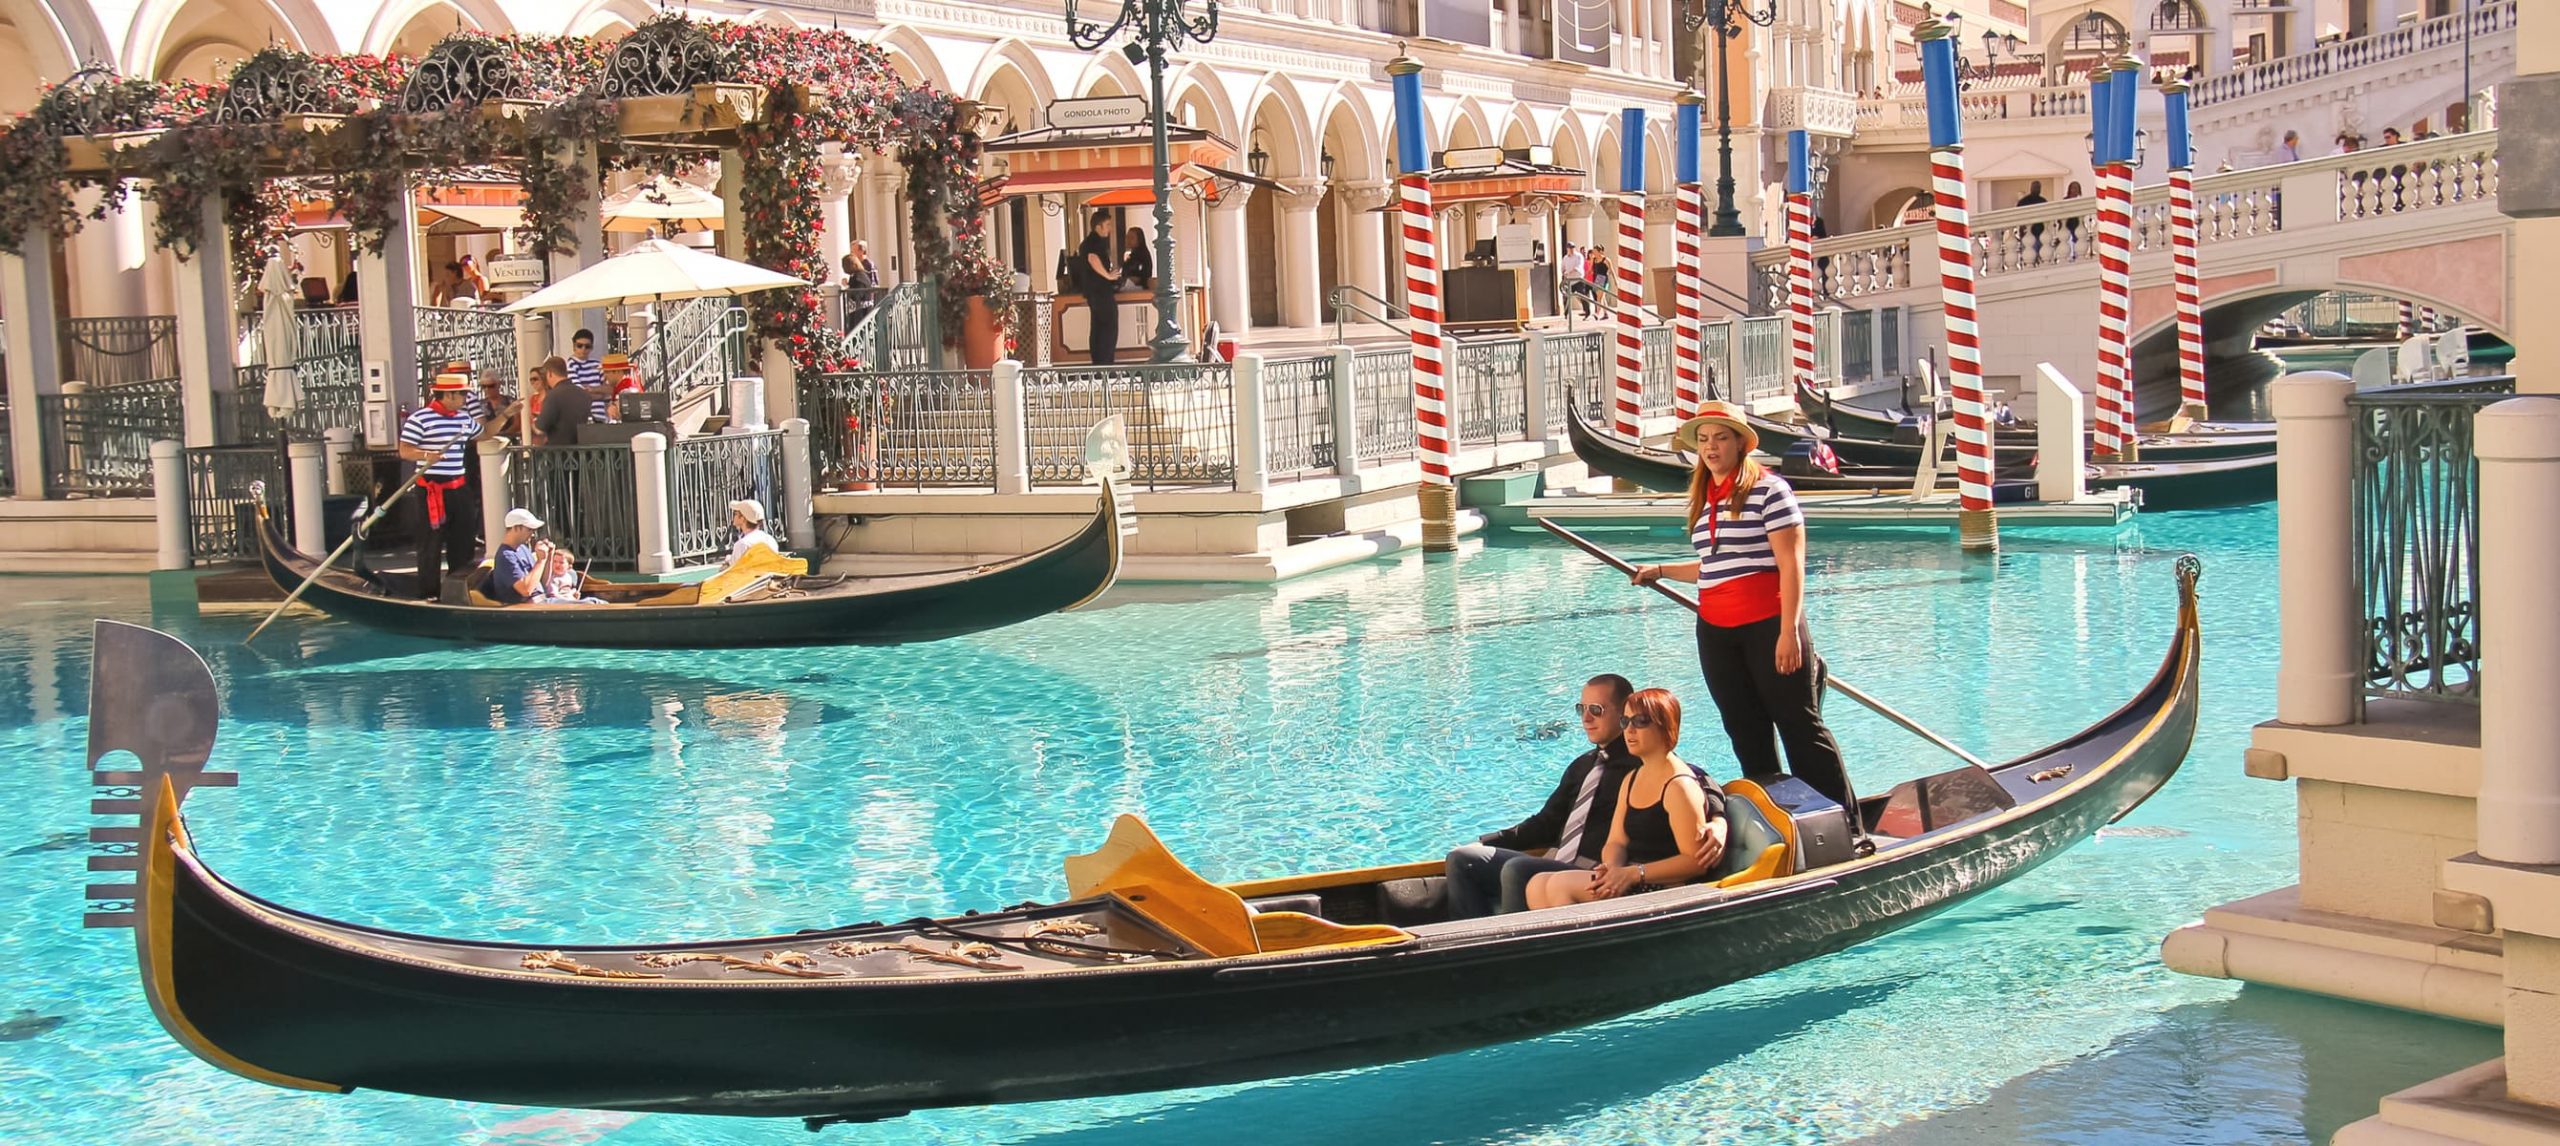 Couple during a gondola ride in the Venetian Hotel, Las Vegas.